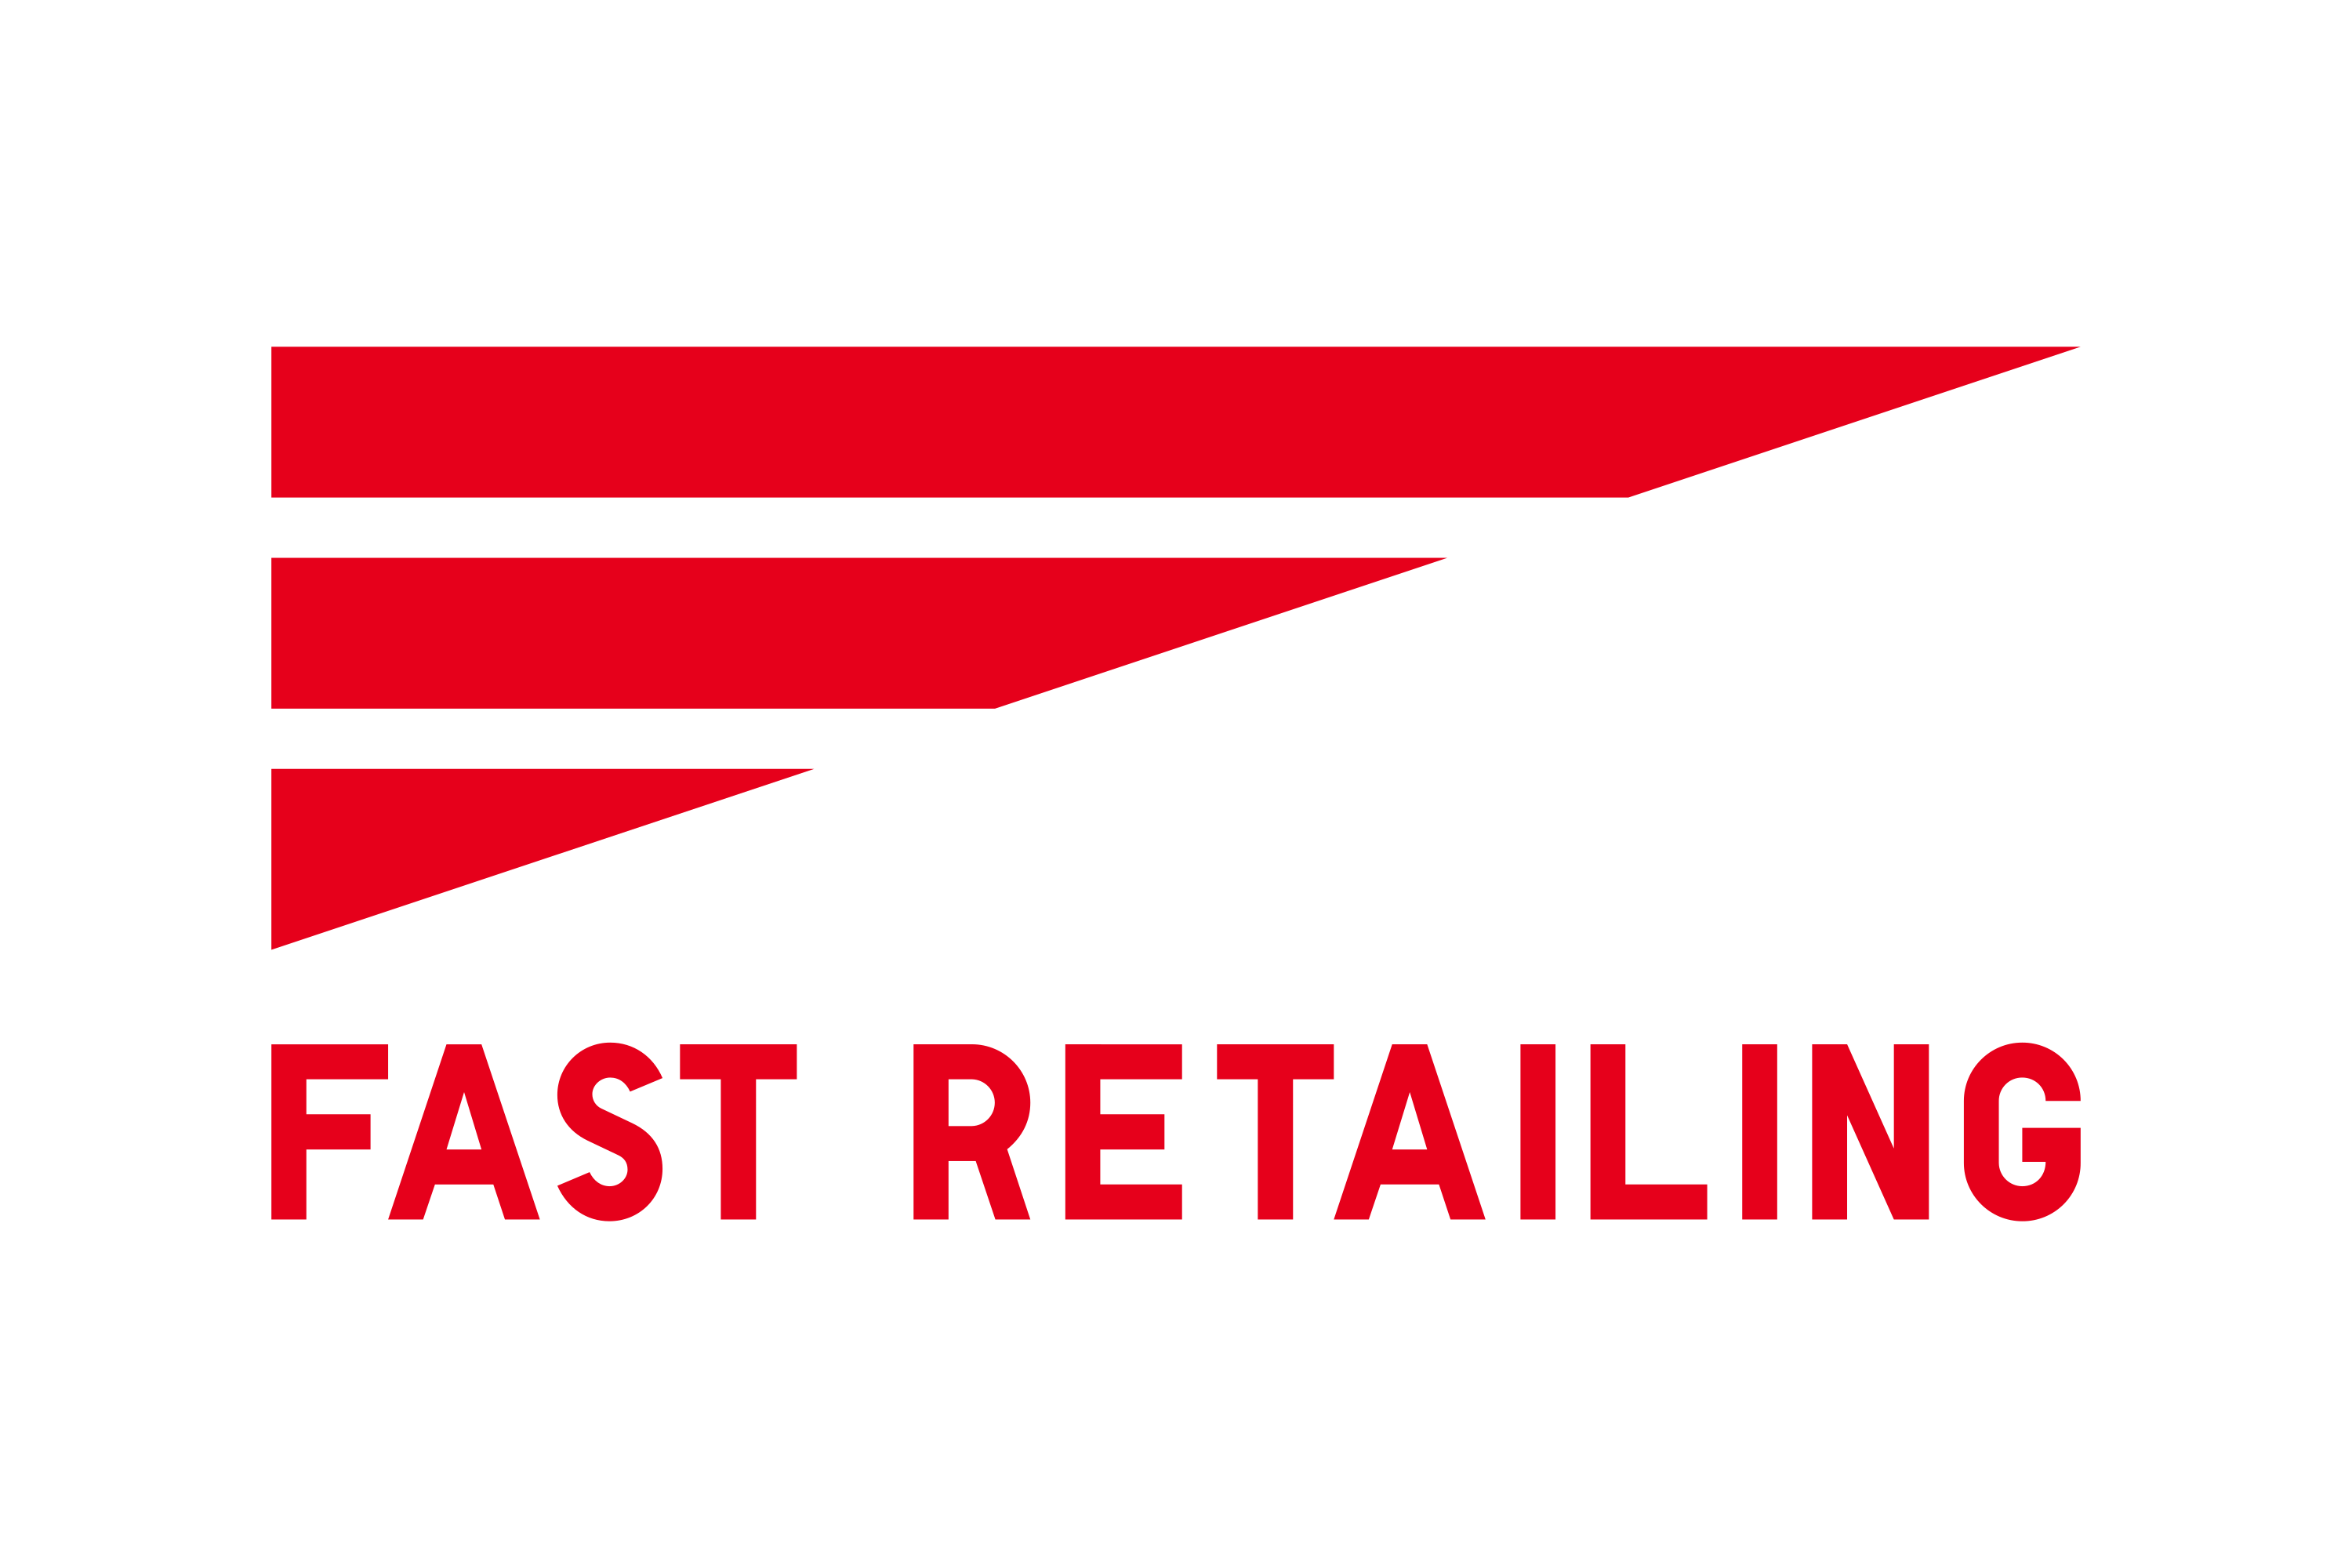 Fast_Retailing-Logo.wine.png